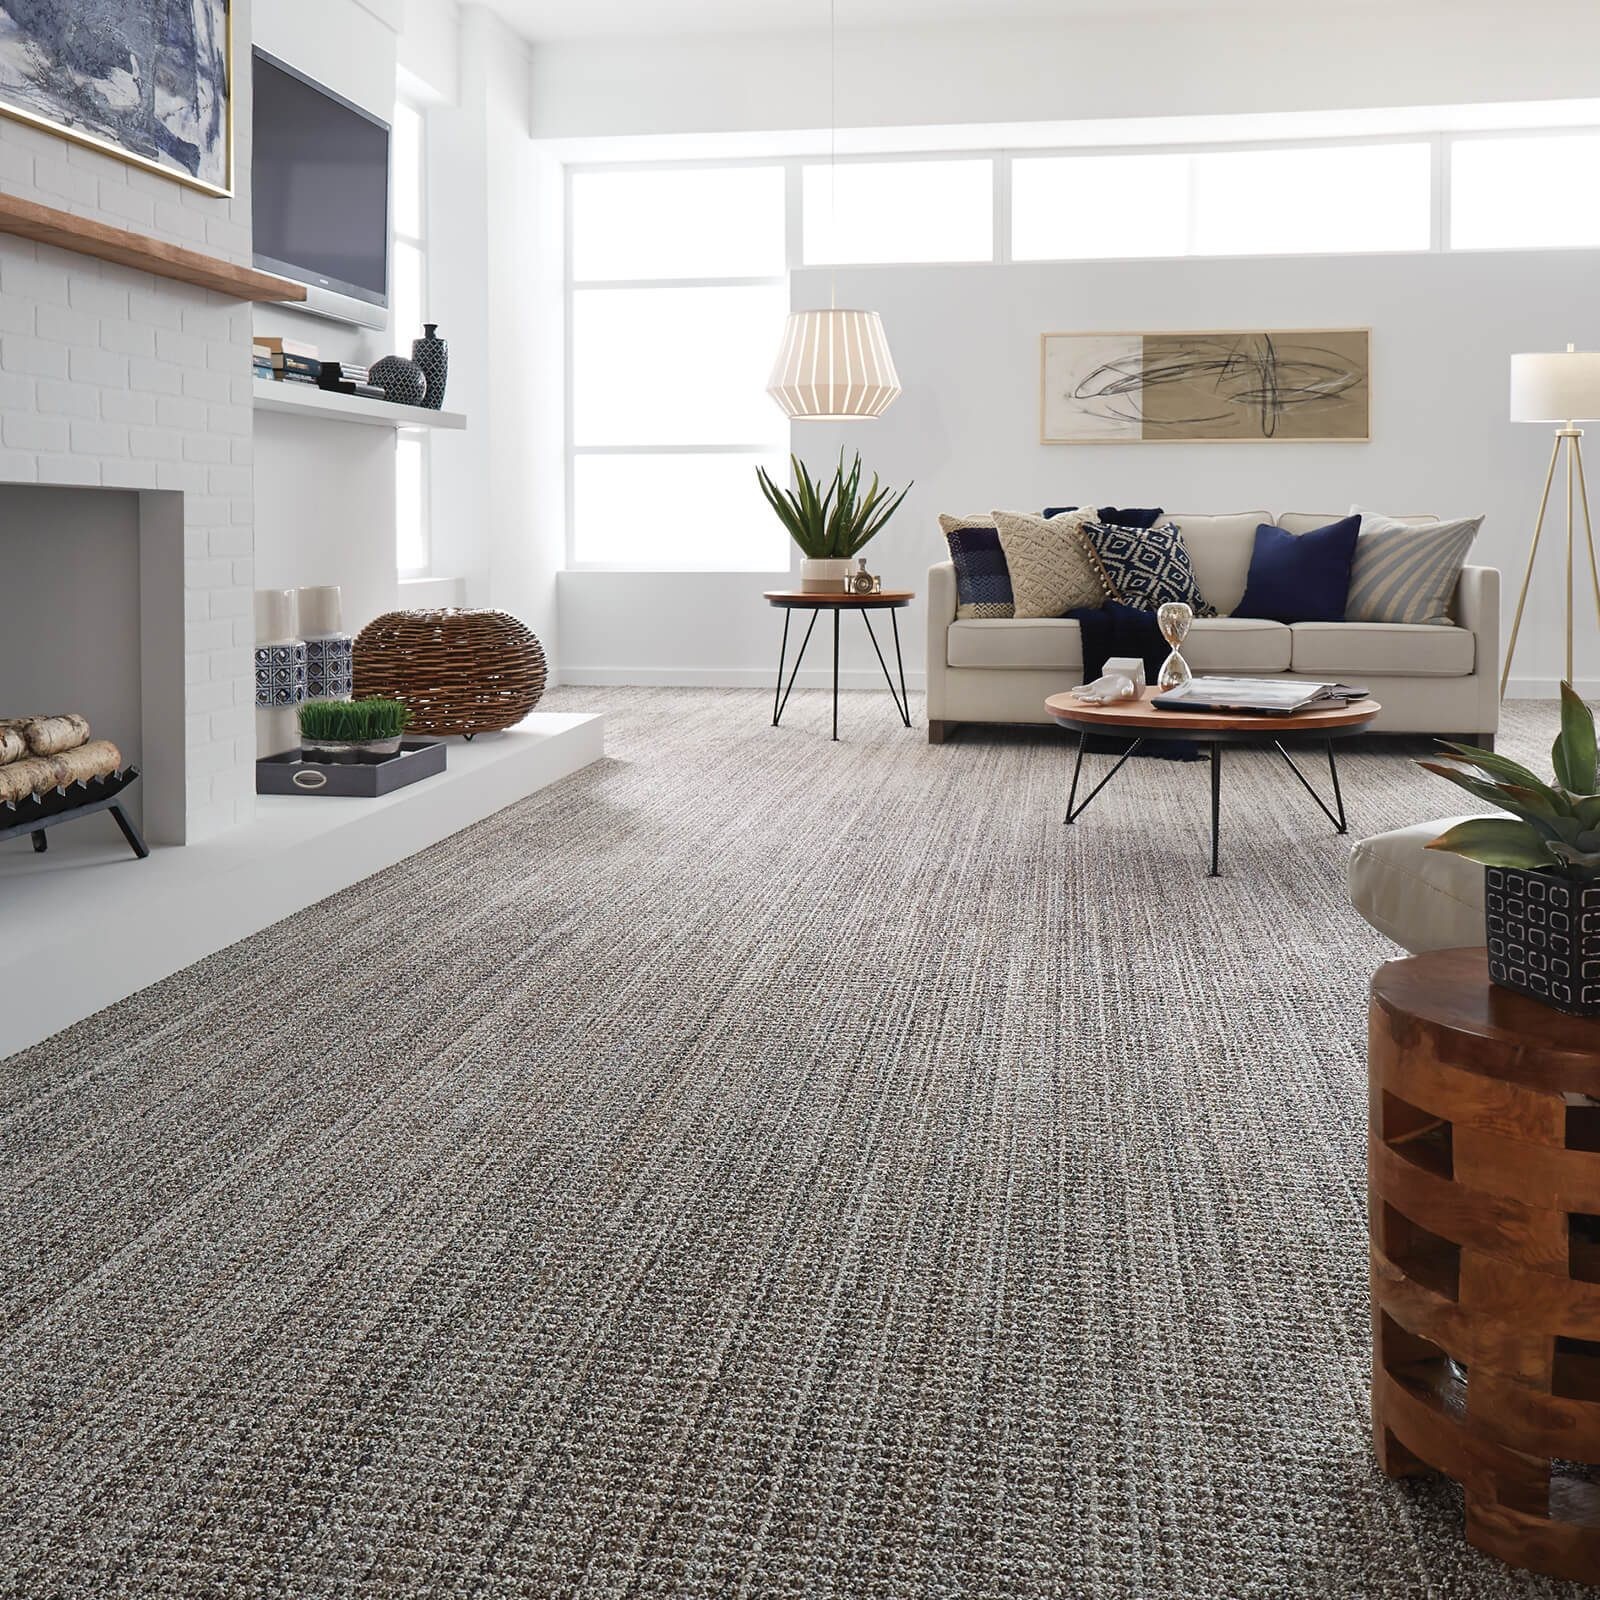 Carpet flooring | The Carpet Gallery